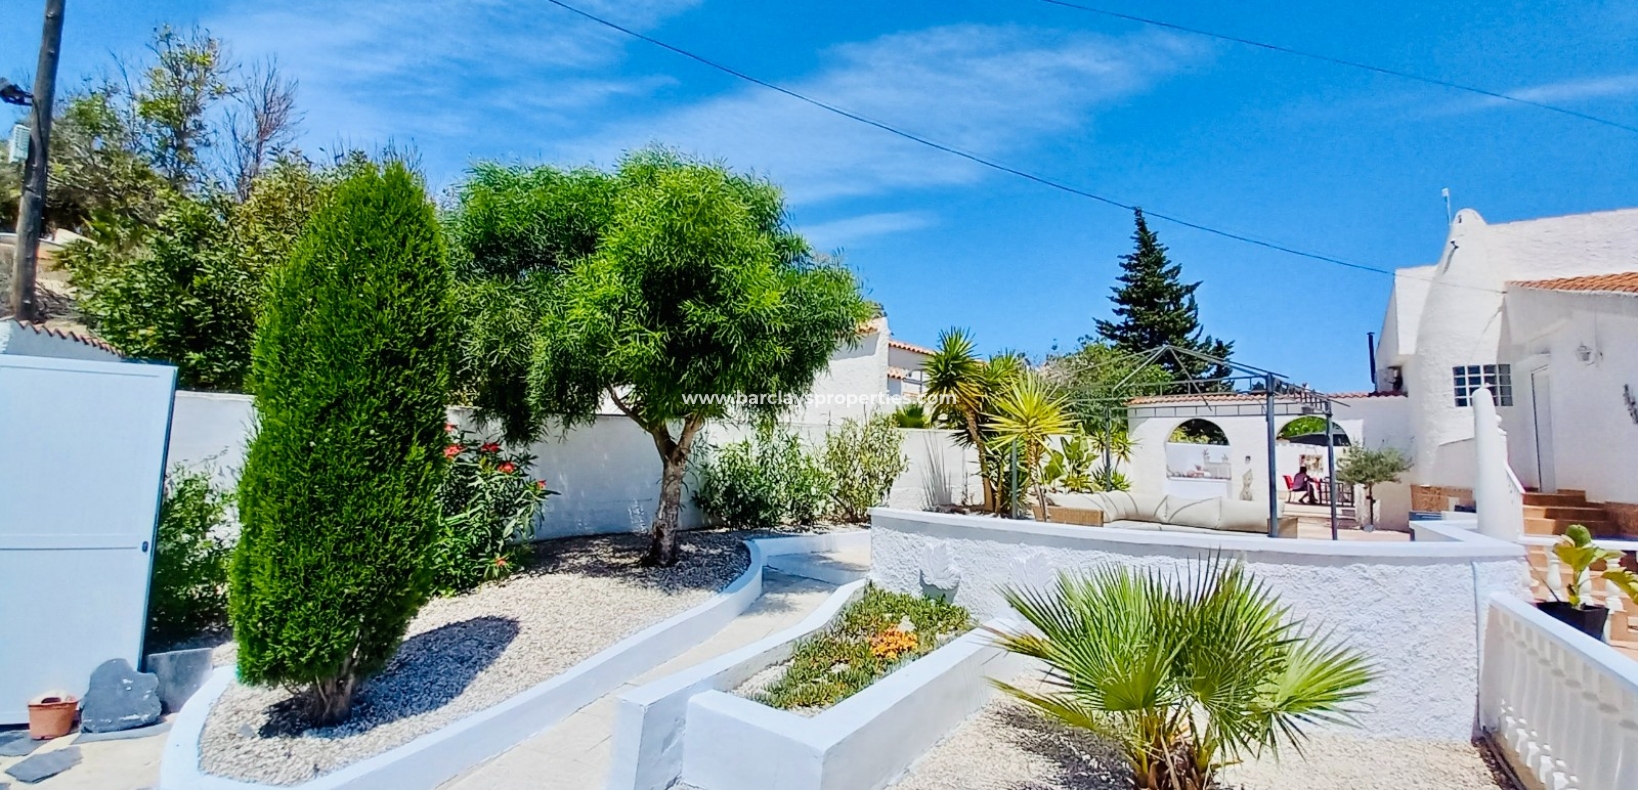 Garten - Prestige Villa zum Verkauf in La Marina